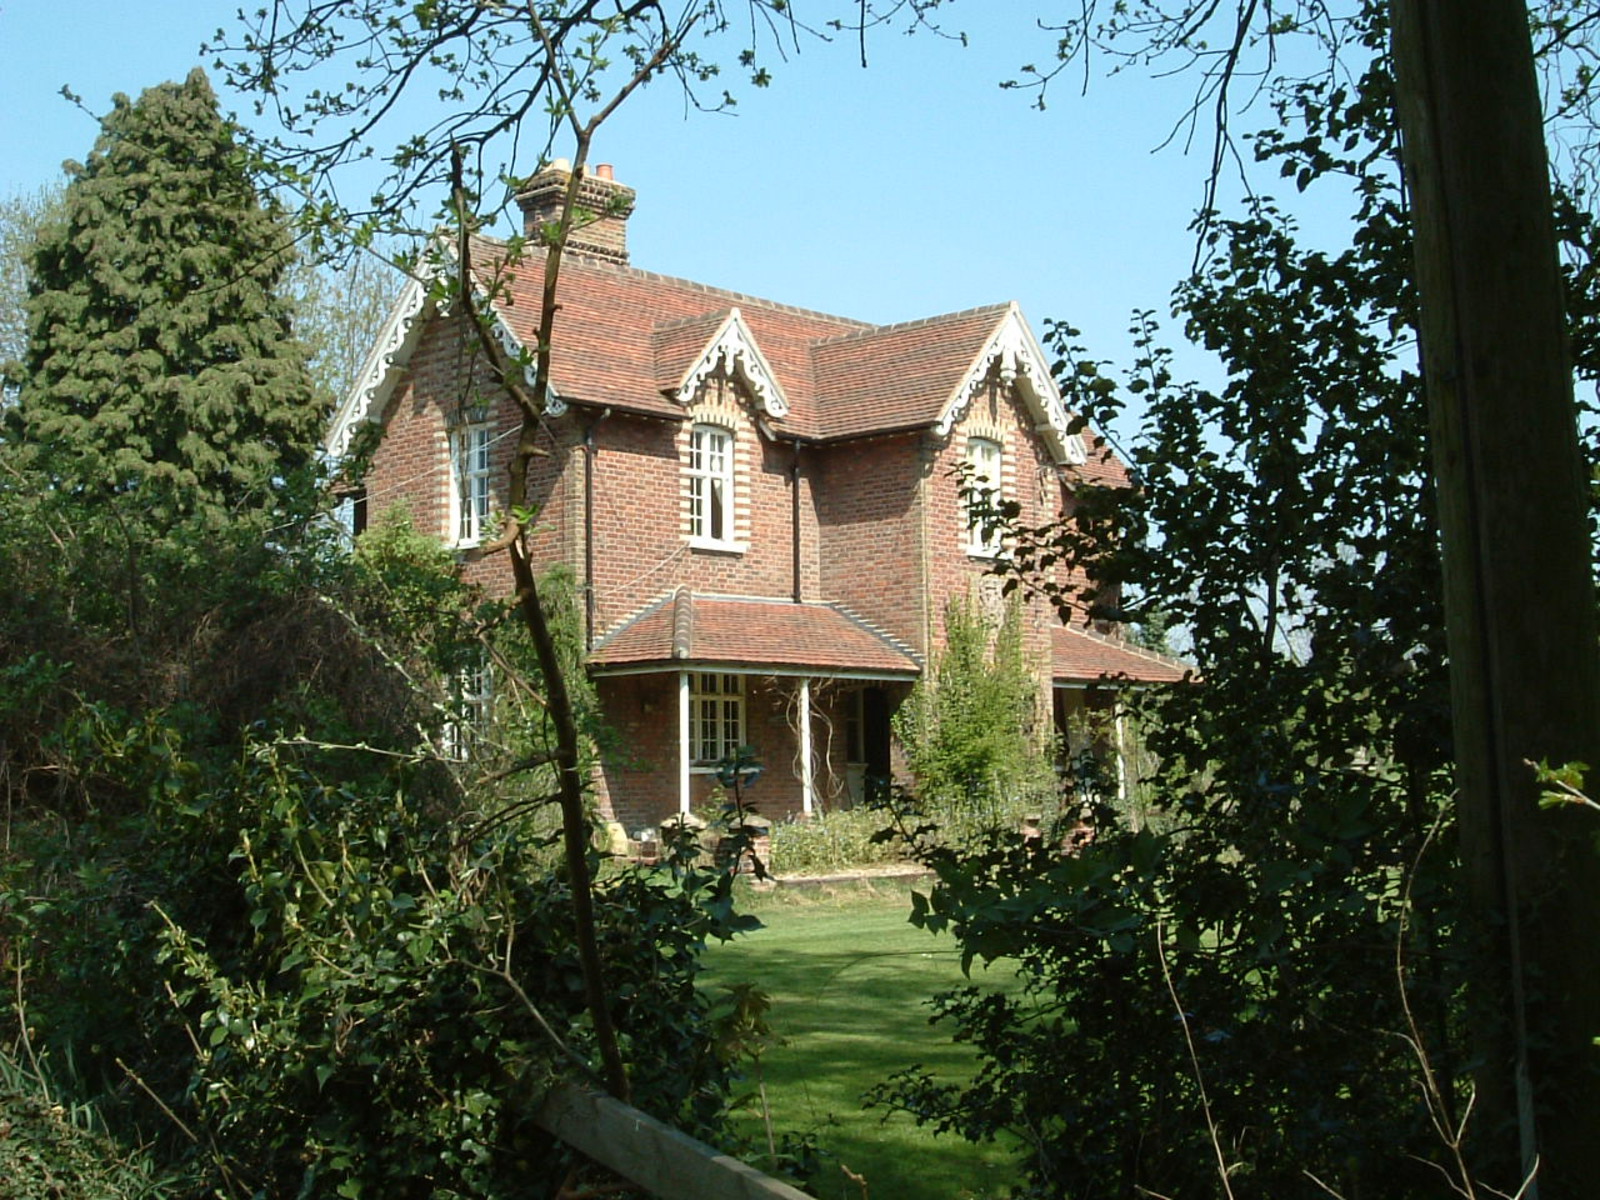 The farmhouse at Pinnerwood Farm